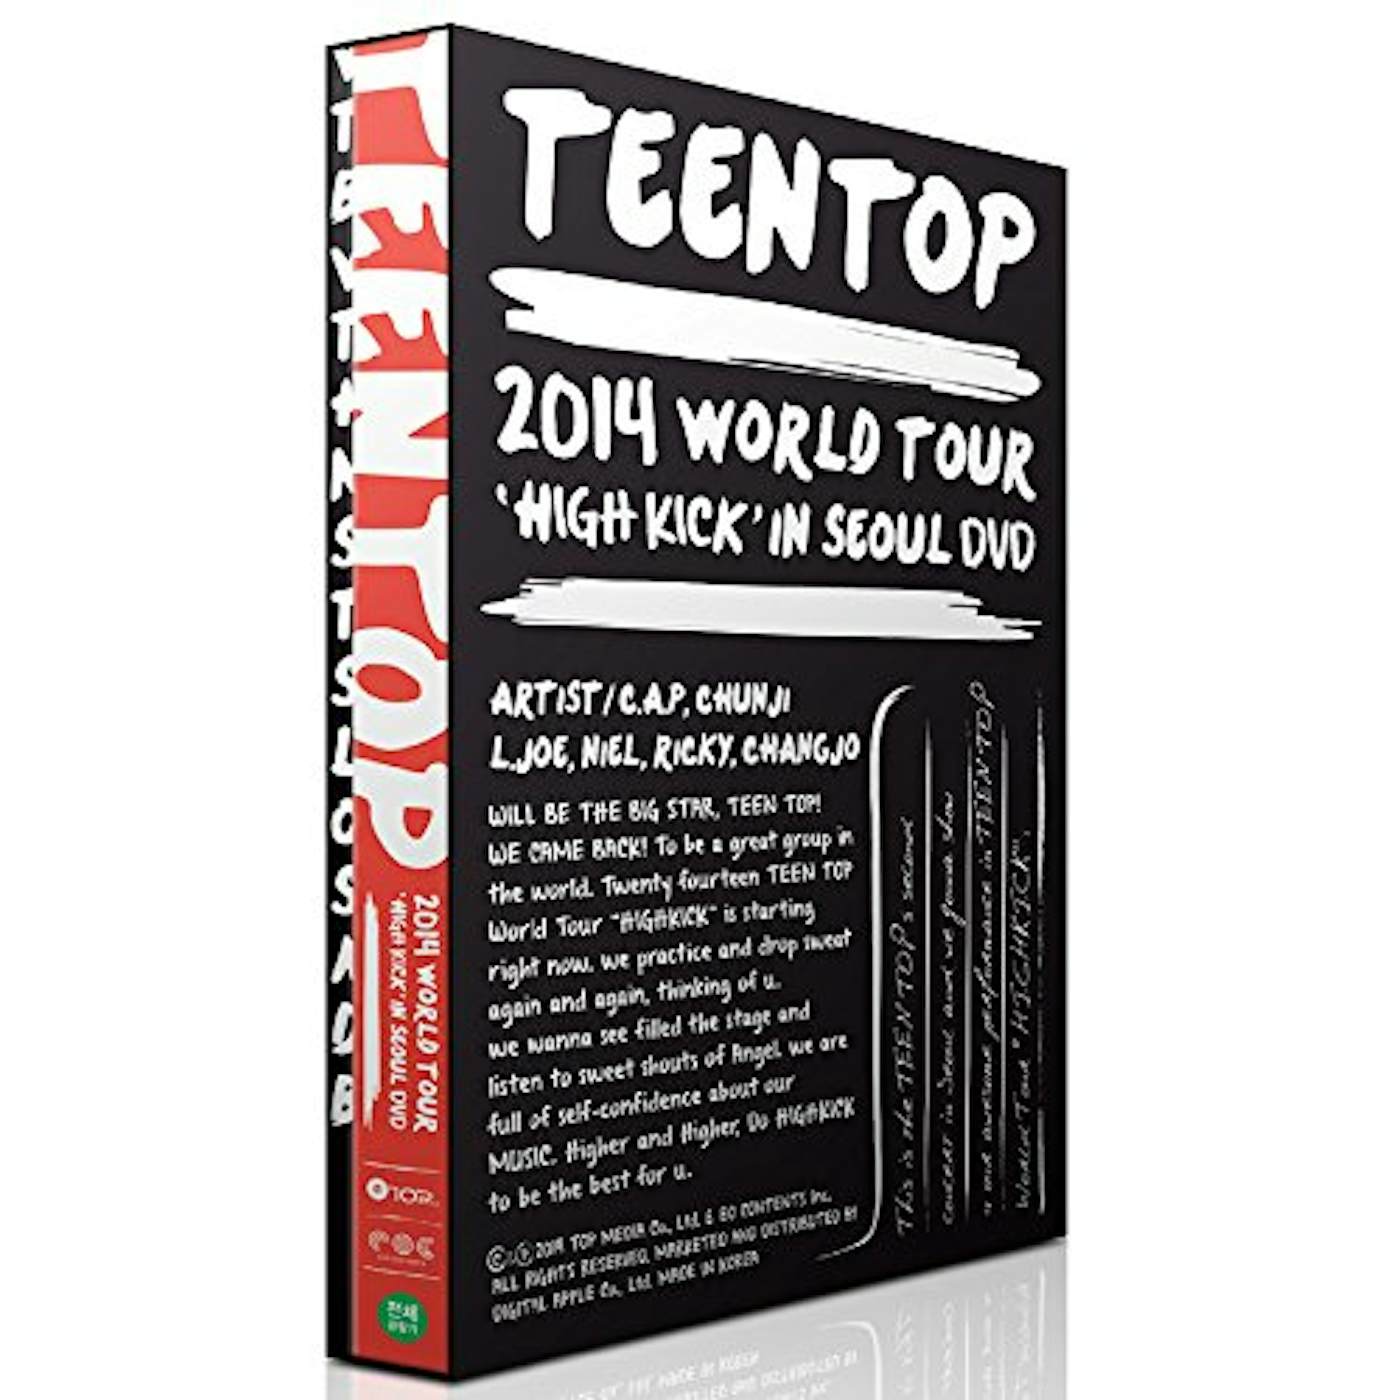 TEEN TOP 2014 WORLD TOUR IN SEOUL DVD